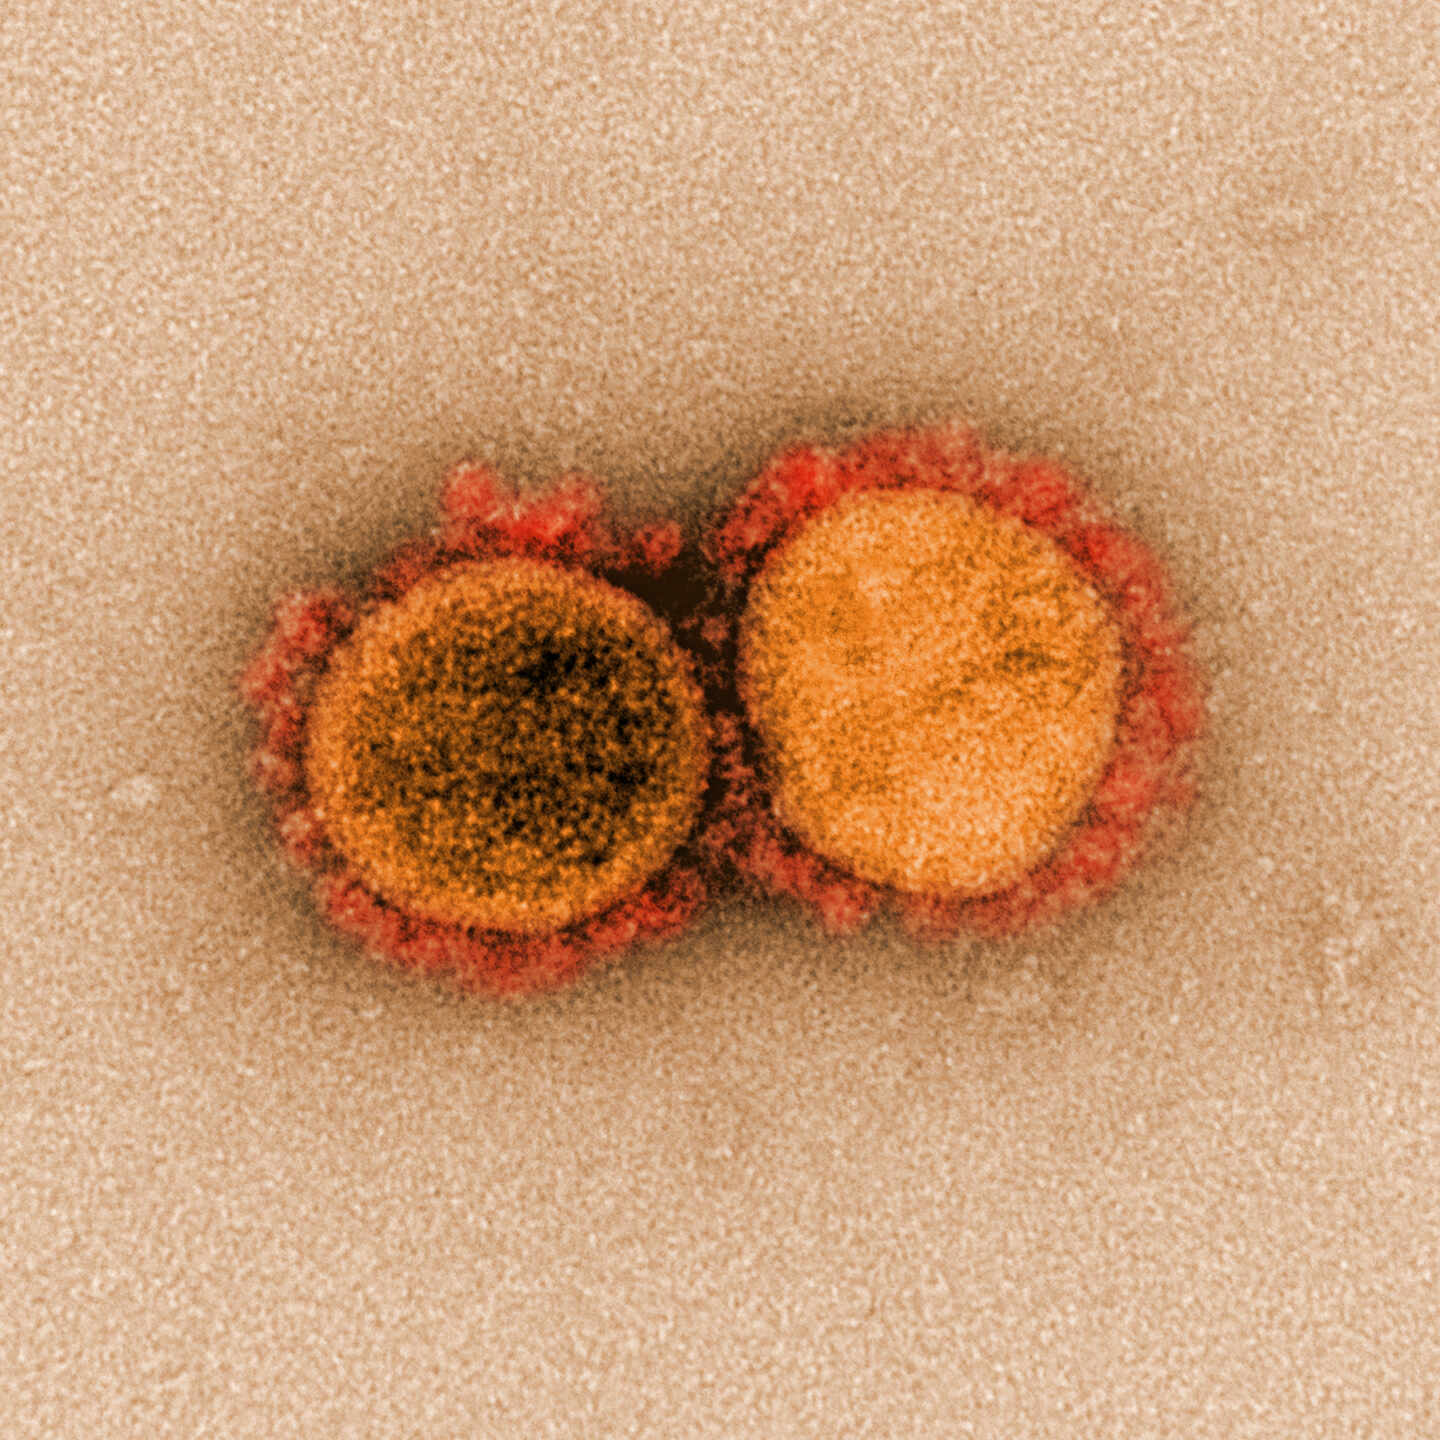 Imagen de microscopio de SARS-COV-2